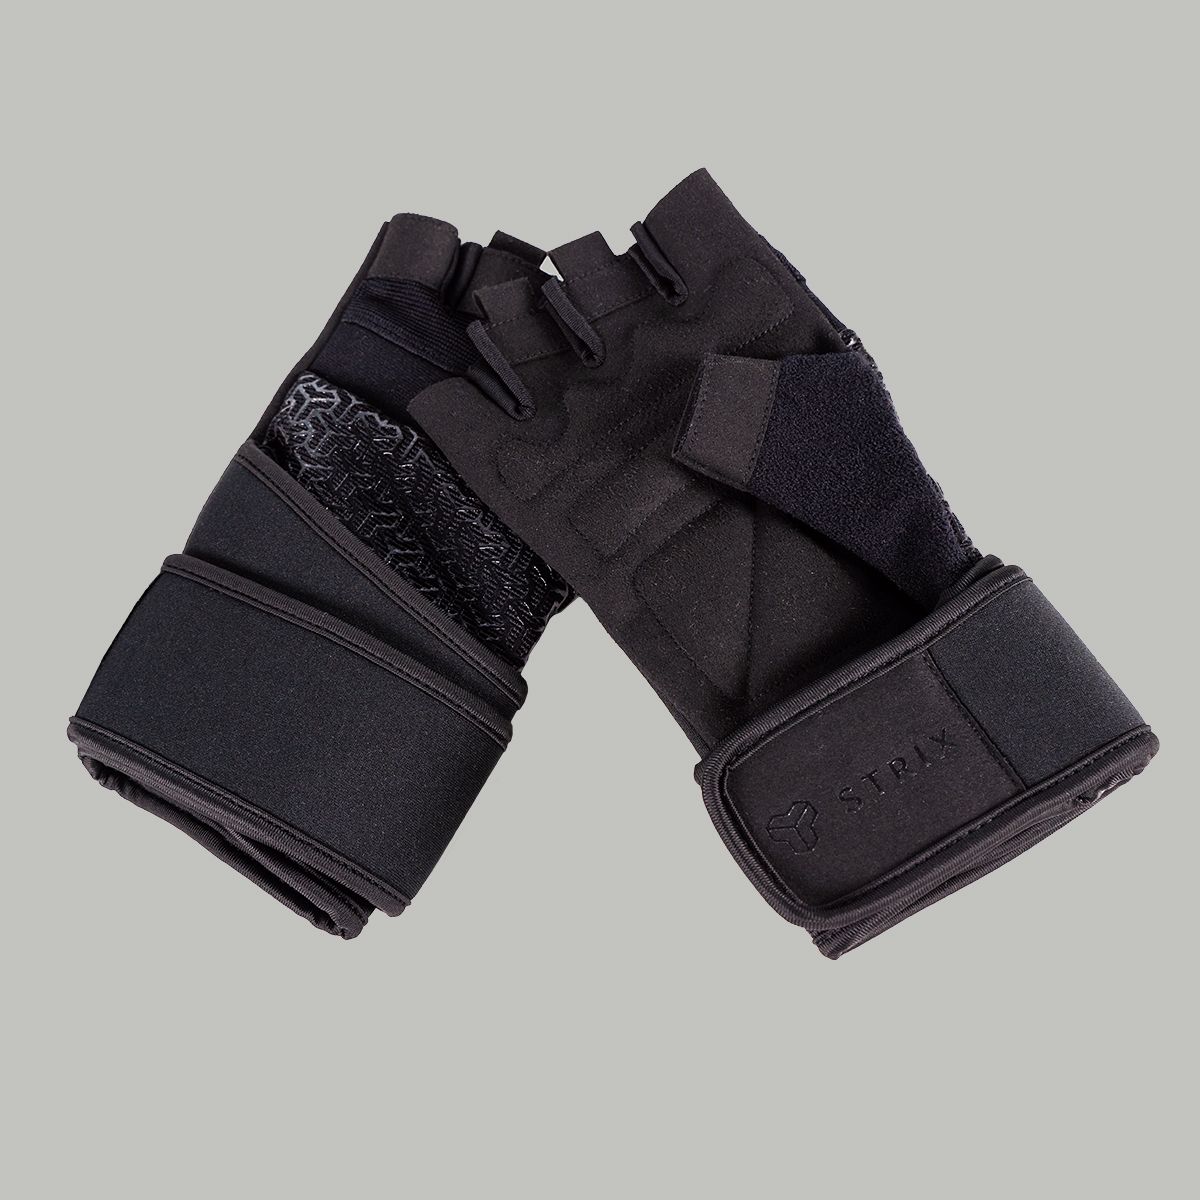 Gymbeam fitness rukavice perform strix m čierna